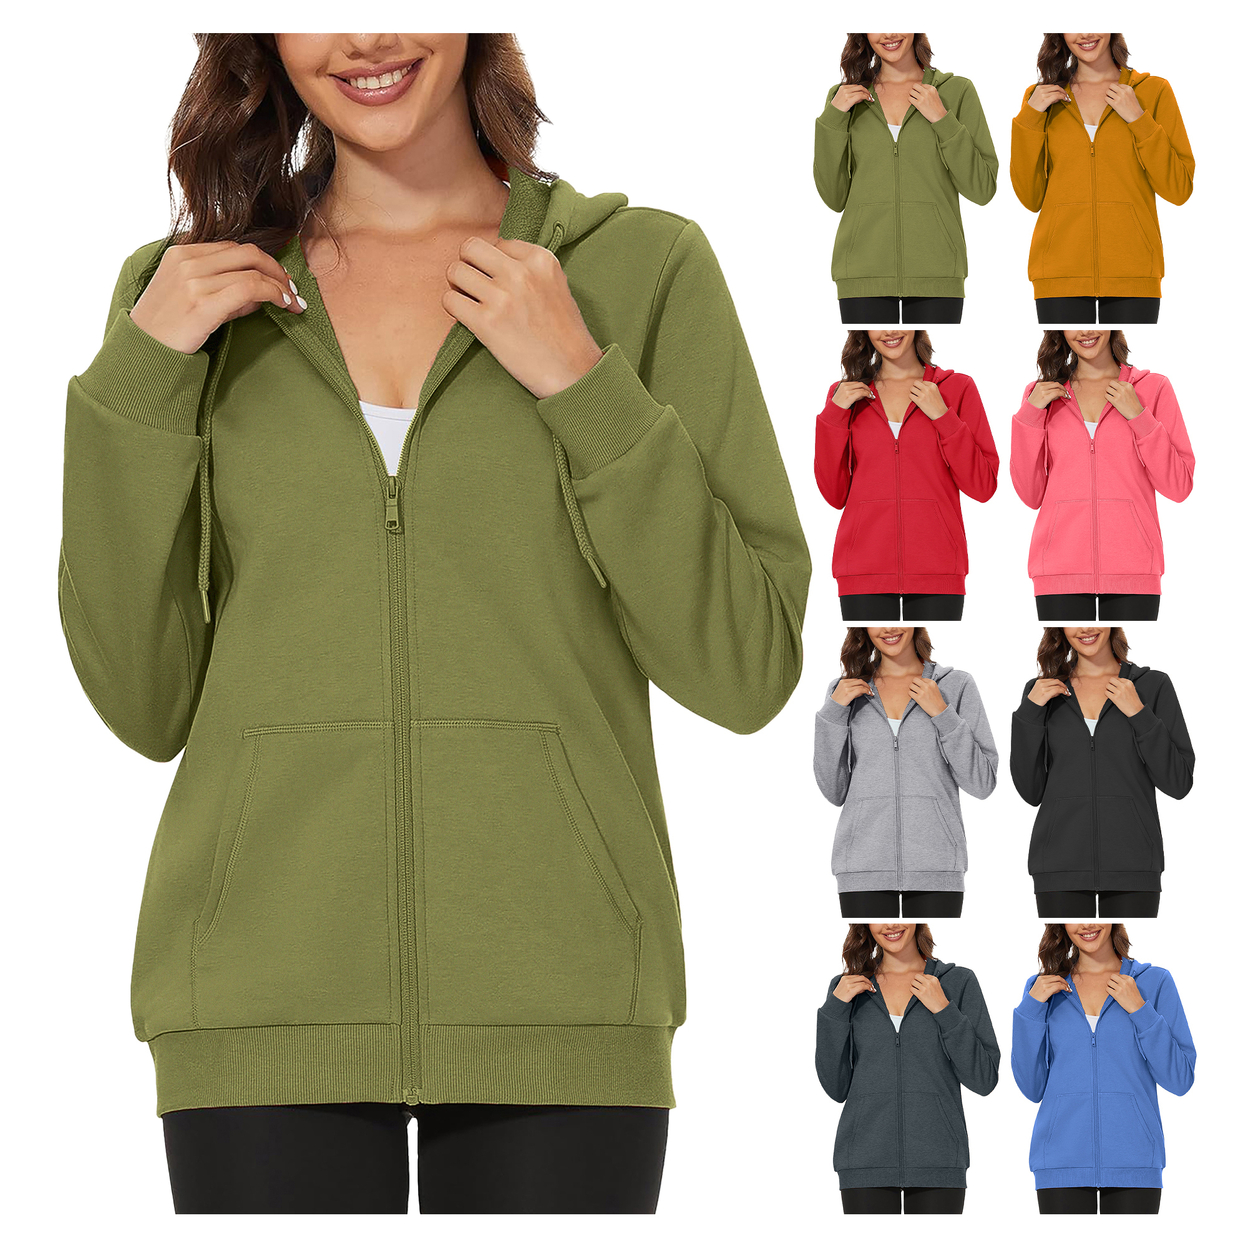 2-Pack: Women's Winter Warm Soft Blend Fleece Lined Full Zip Up Hoodie - Black & Charcoal, Medium